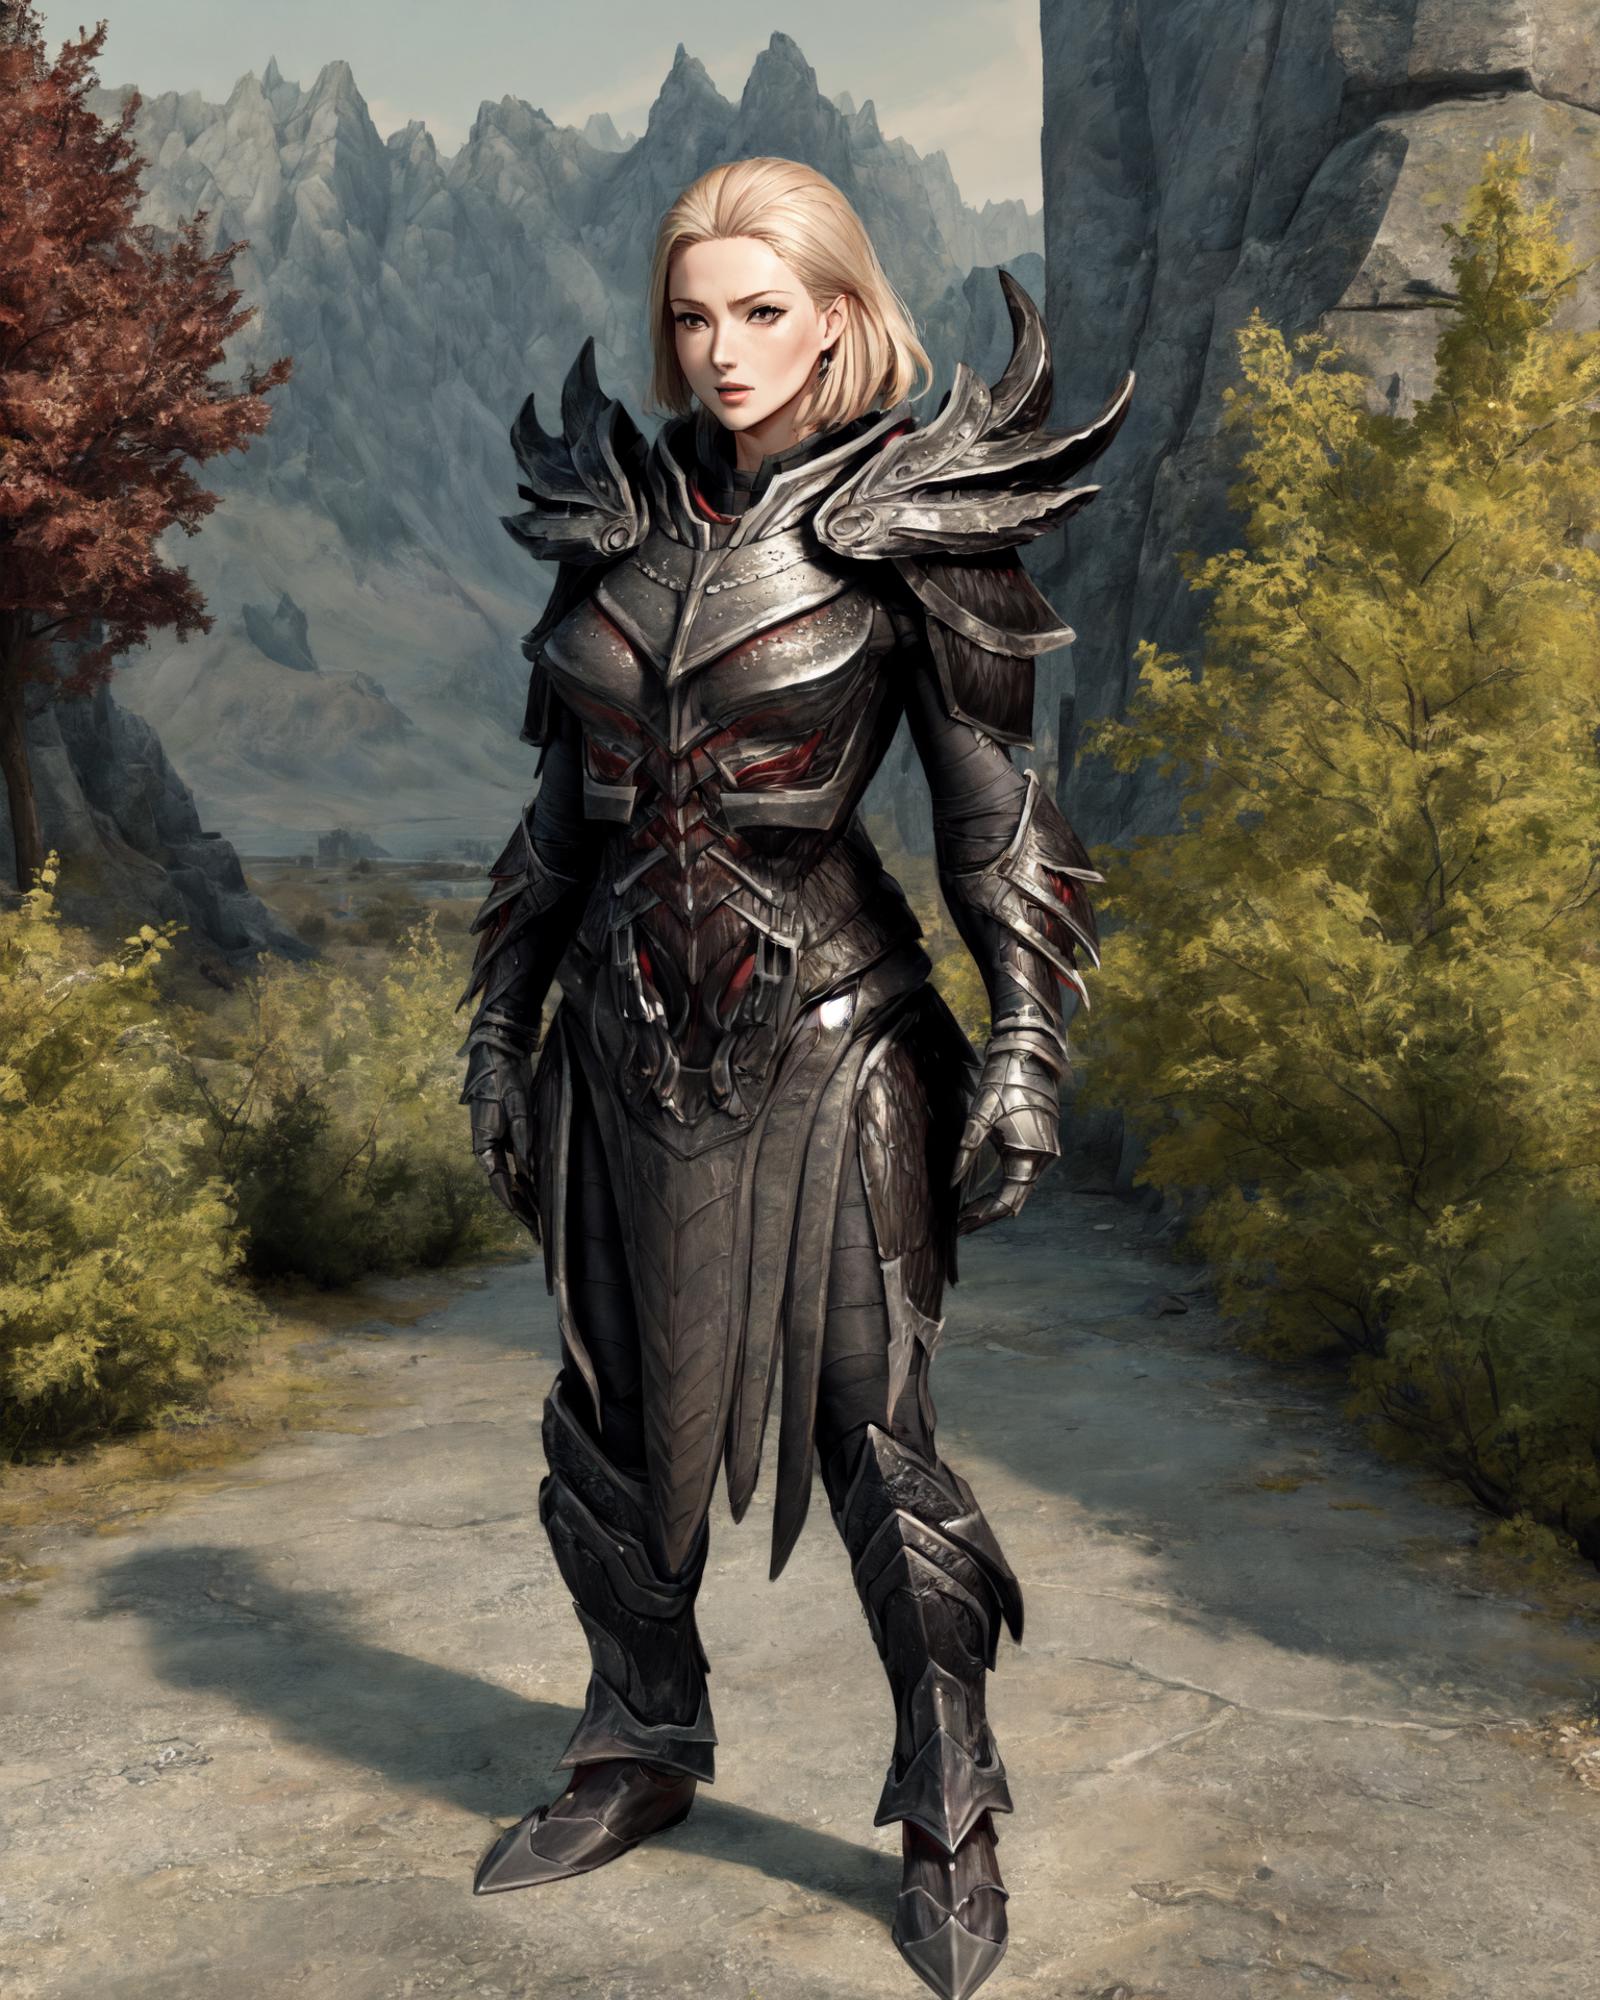 Daedric Armor (Skyrim) image by Valstrix